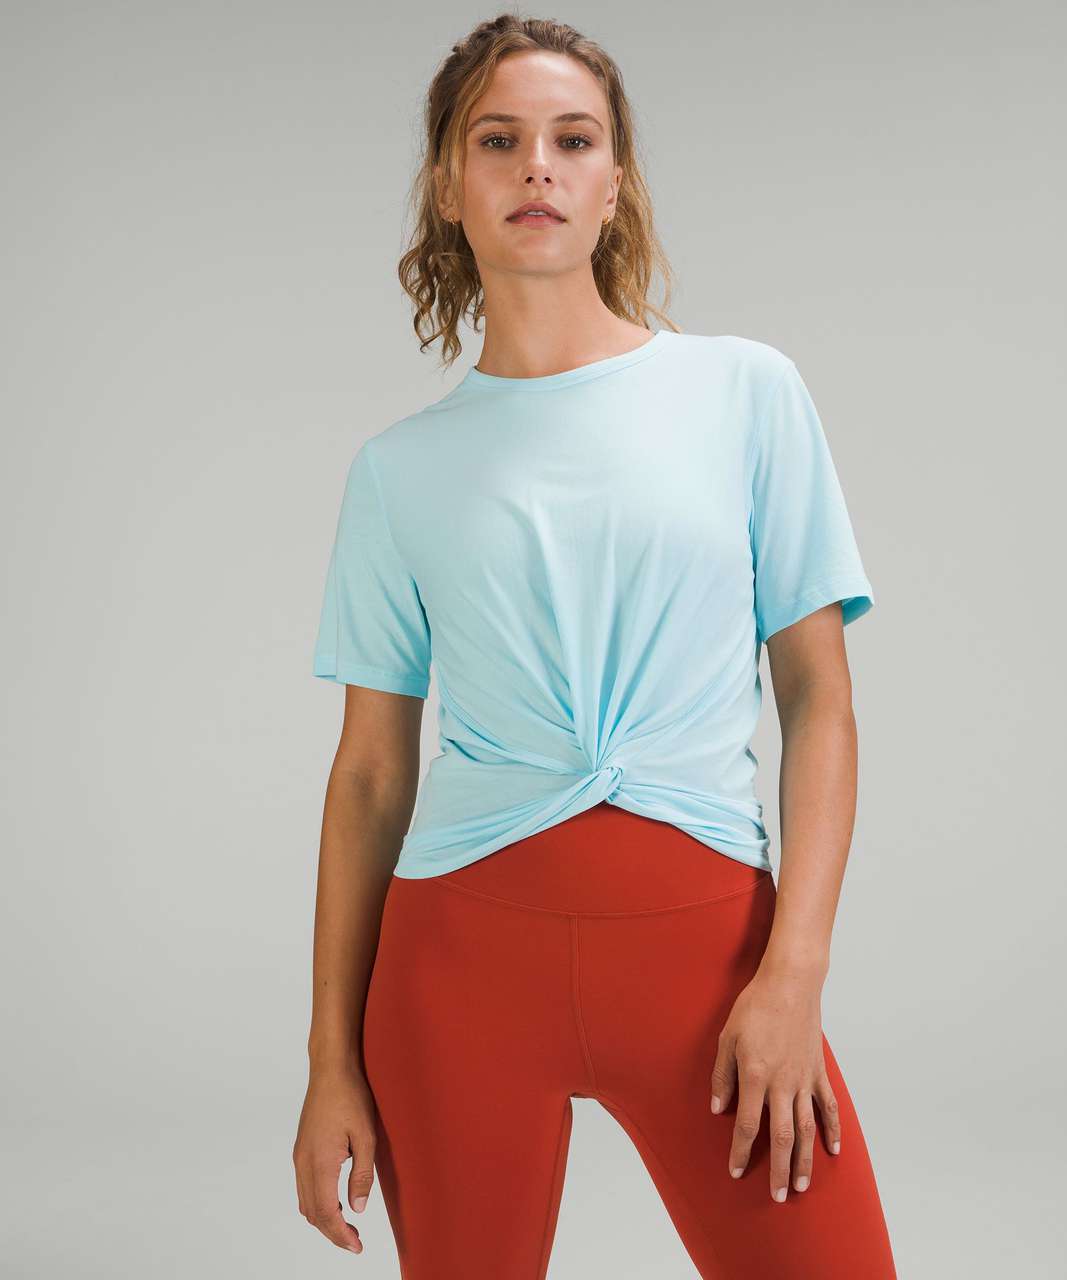 Lululemon Crescent T-Shirt - Icing Blue